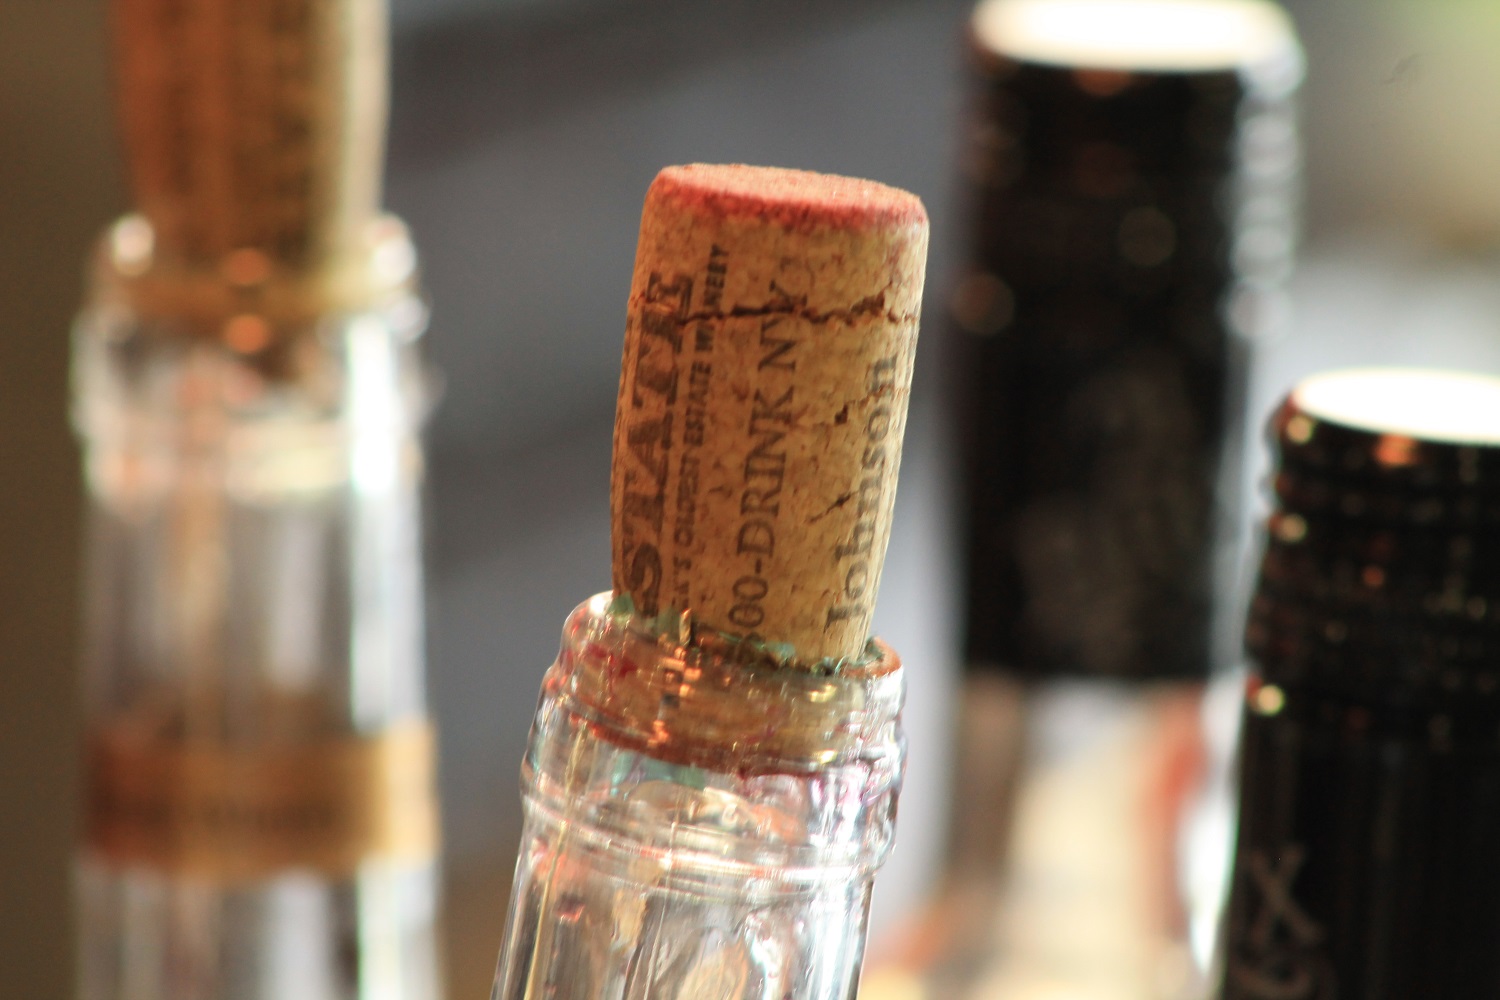 Wine bottles and corks